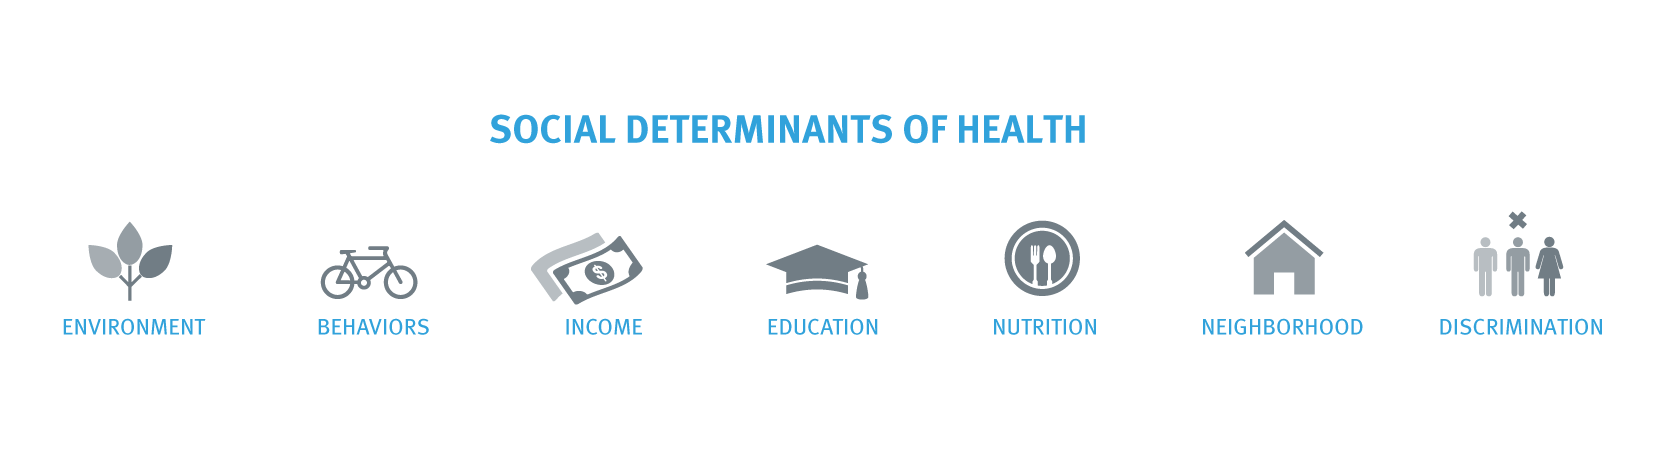 Social determinants of health include: the environment, behaviors, income, education. nutrition, neighborhood.